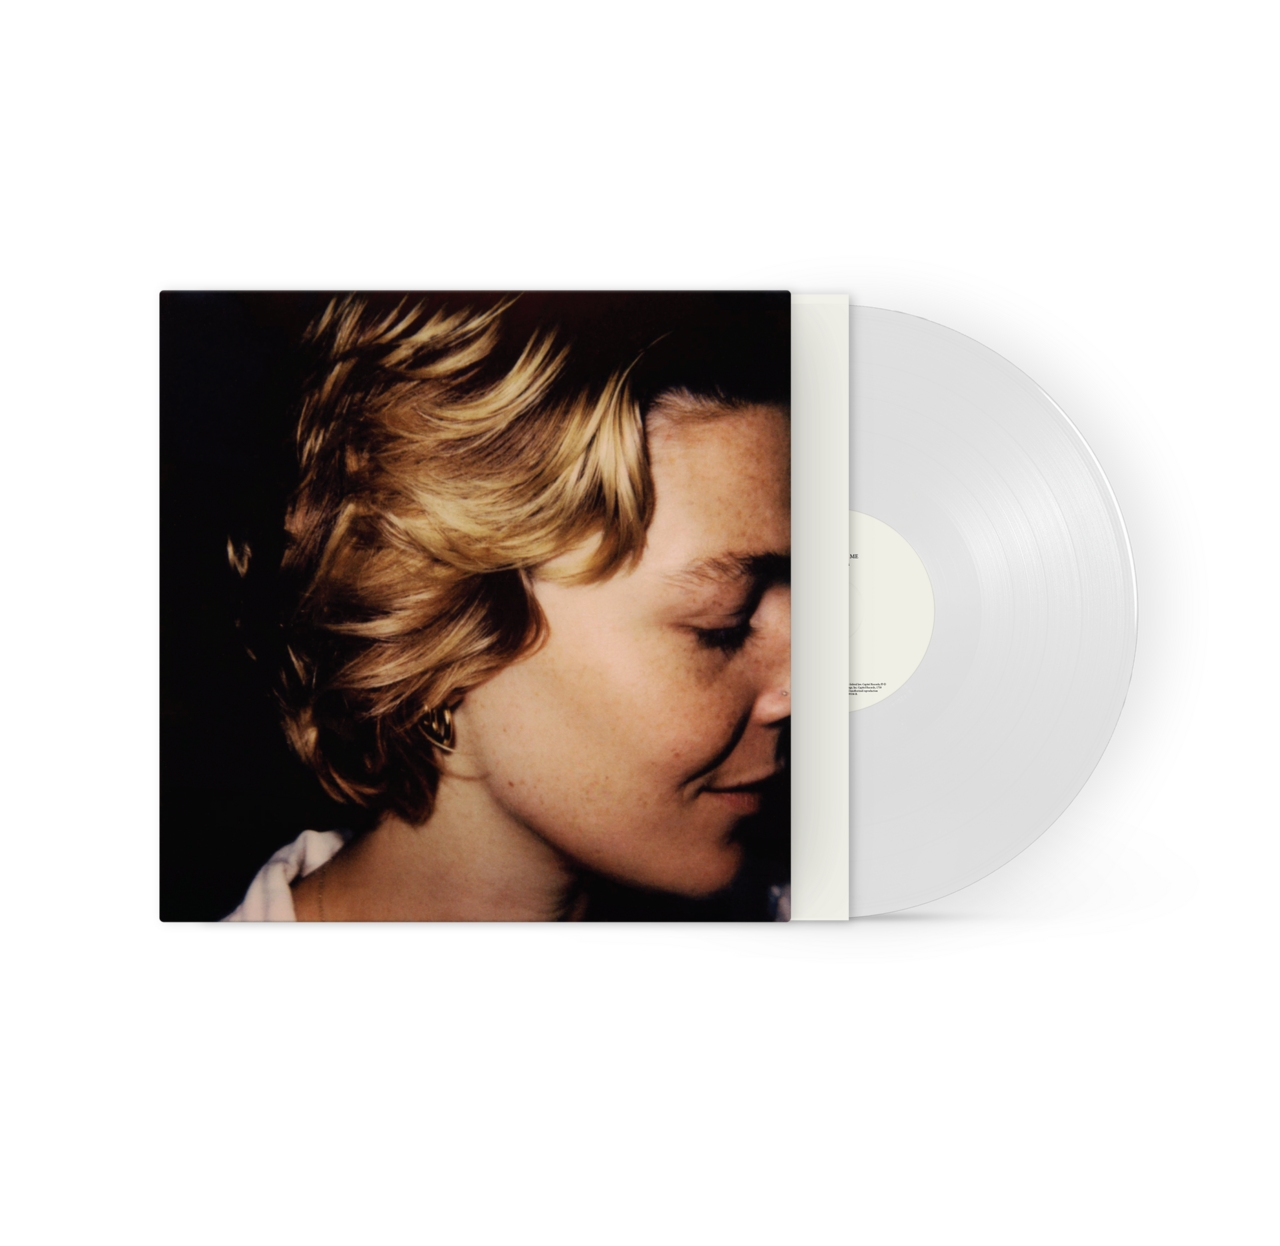 Don't Forget Me: Limited 'Milk' White Vinyl LP + Signed Art Card